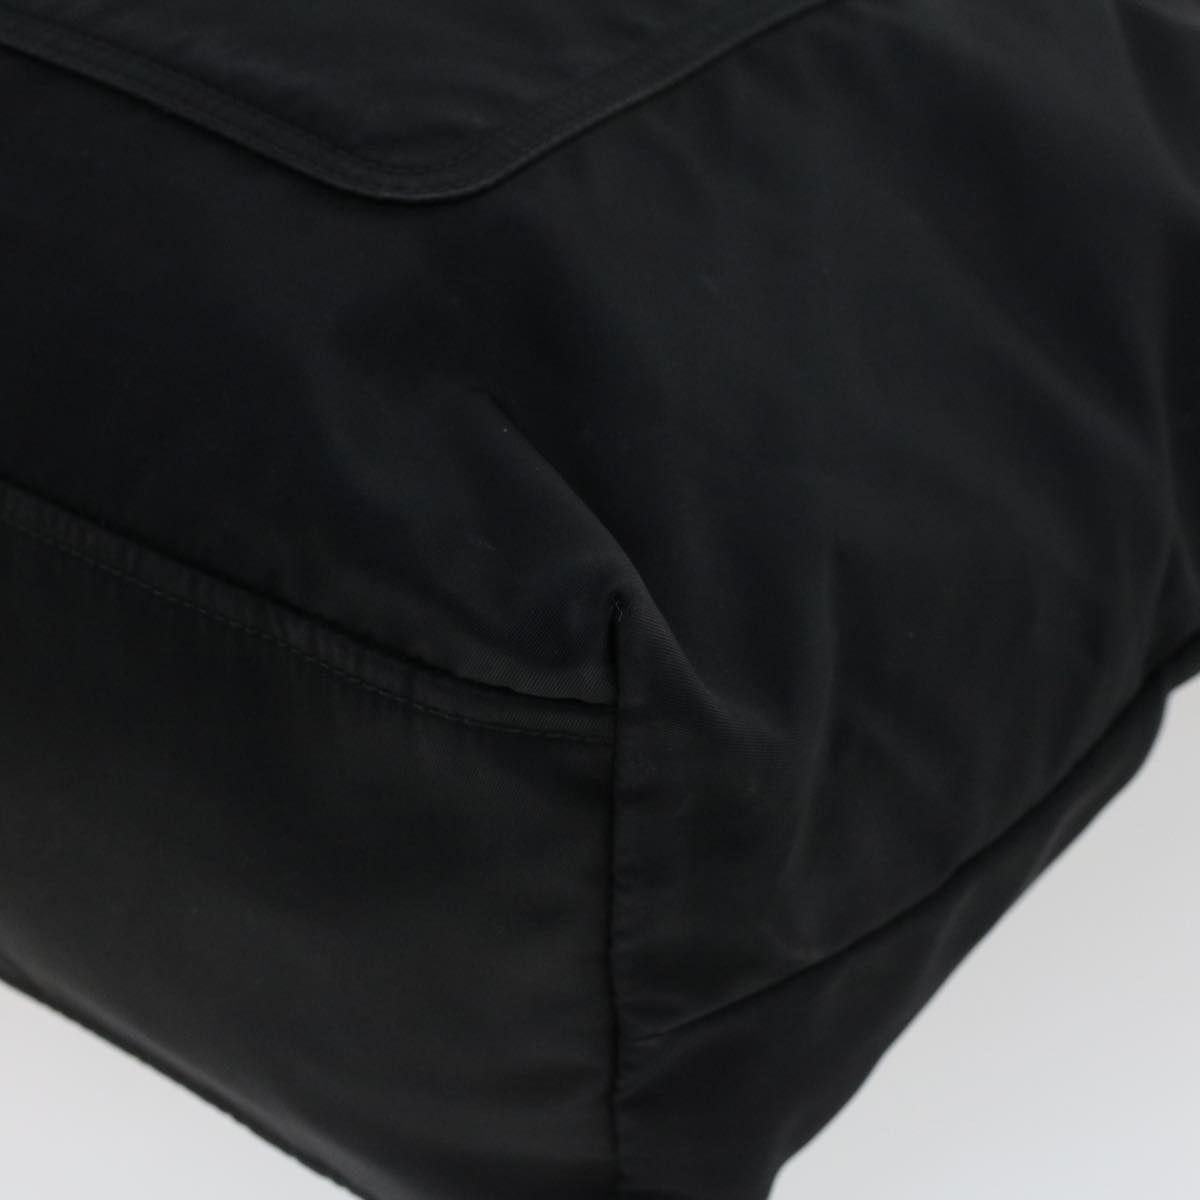 PRADA Tote Bag Nylon Leather Black Auth bs5533